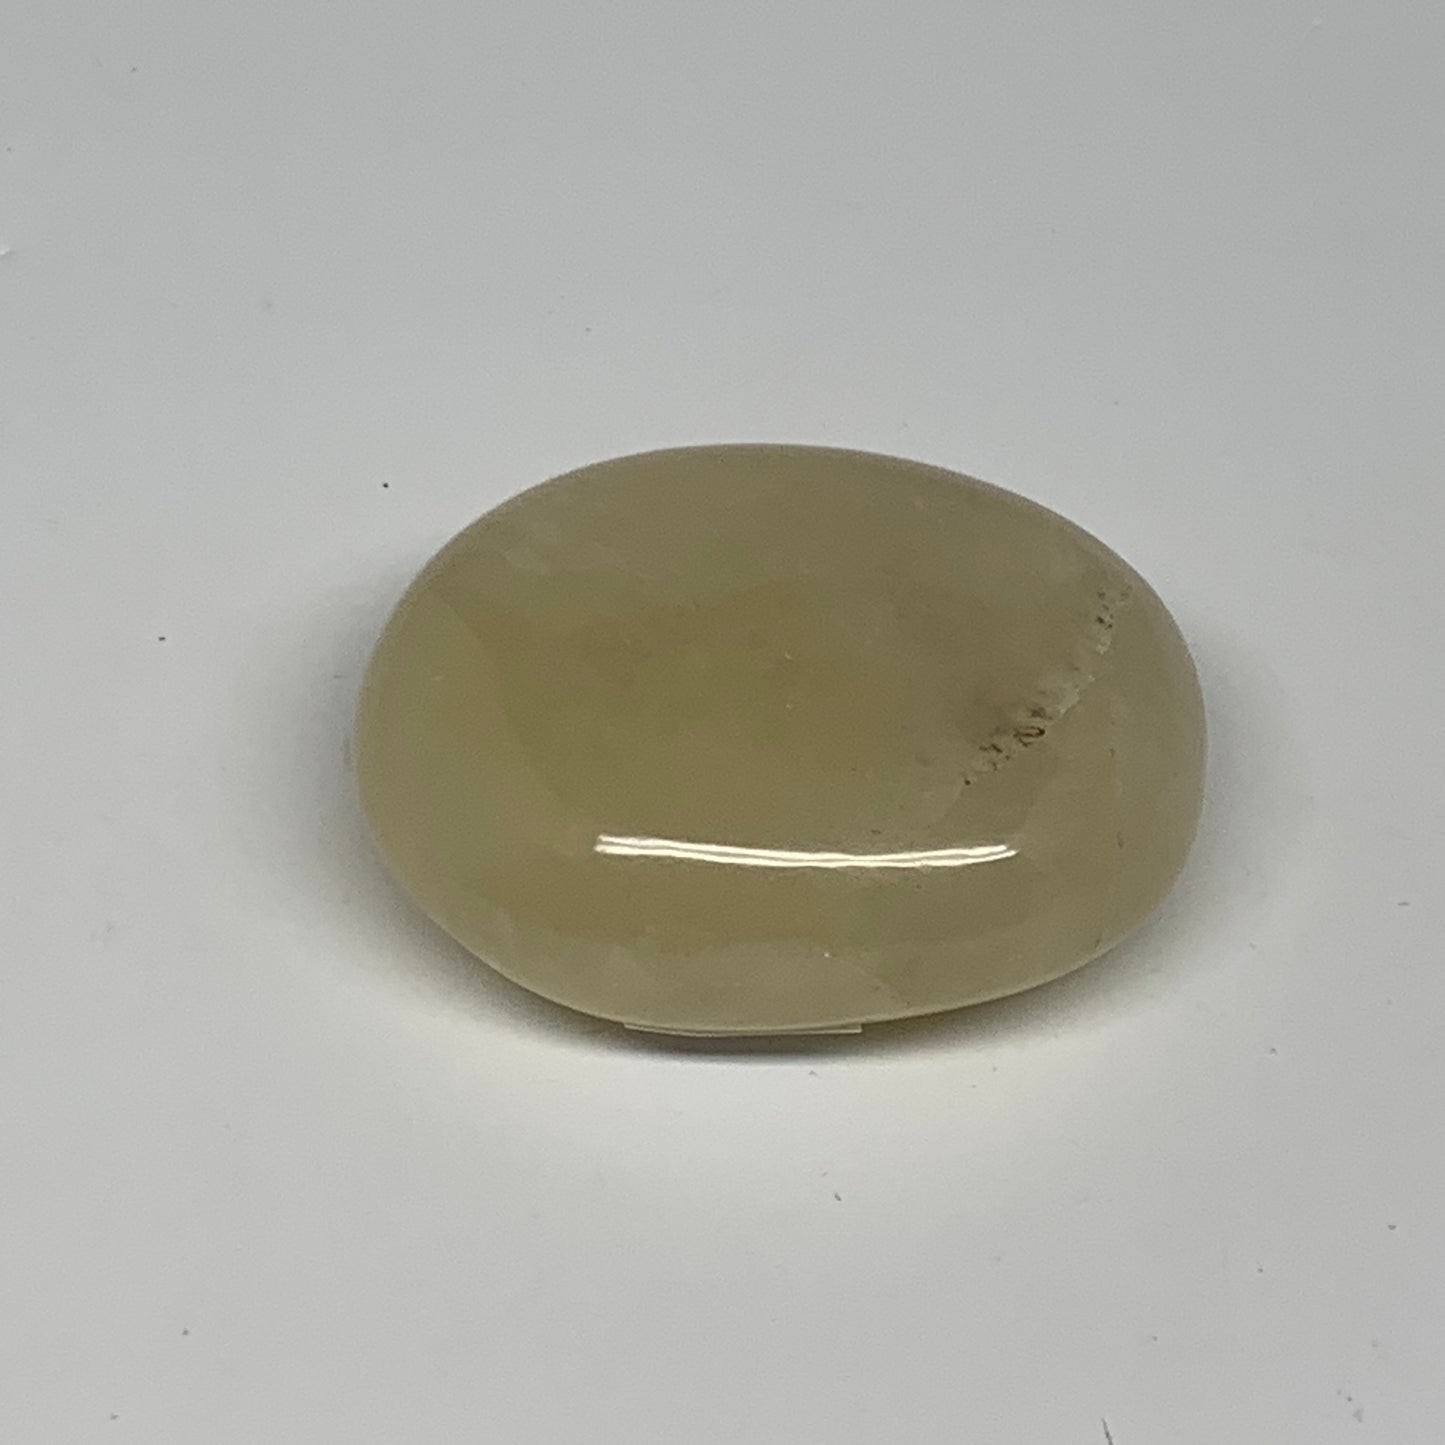 91.3g,2.2"x1.8"x0.9", Yellow Aventurine Palm-Stone Crystal Stone @India,B29728